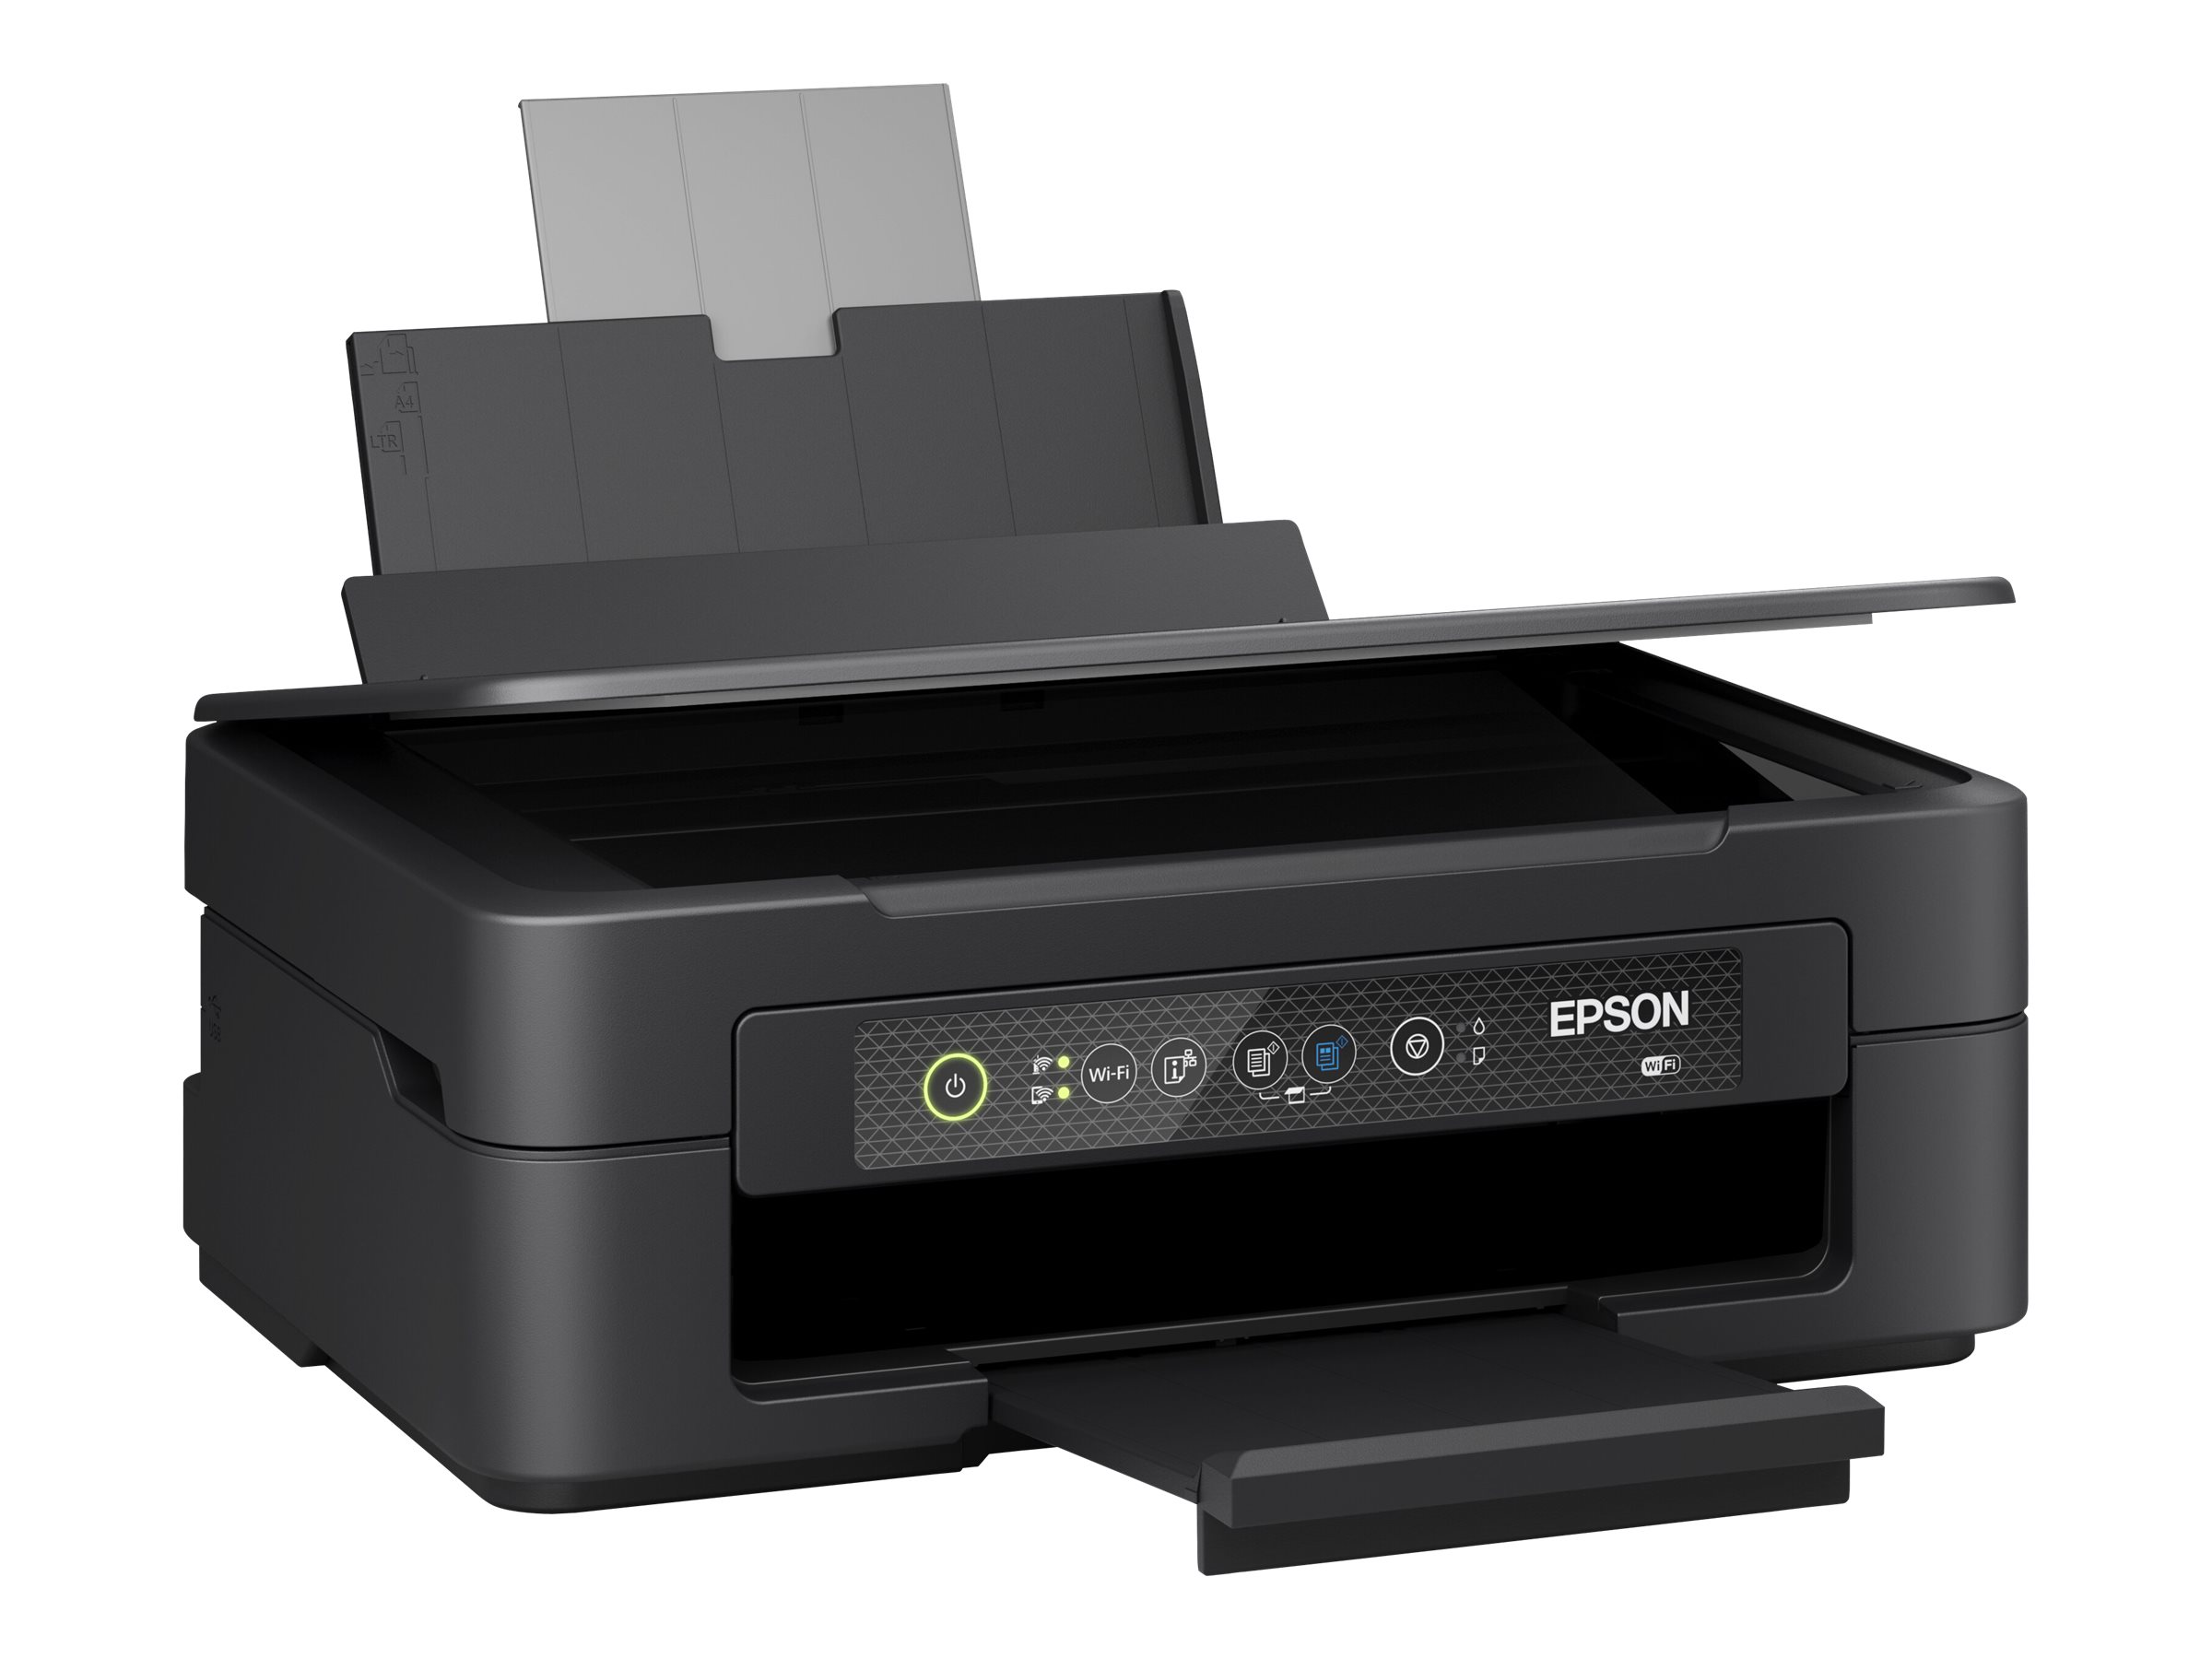 xp 2200 - XP - Epson - Inkjet